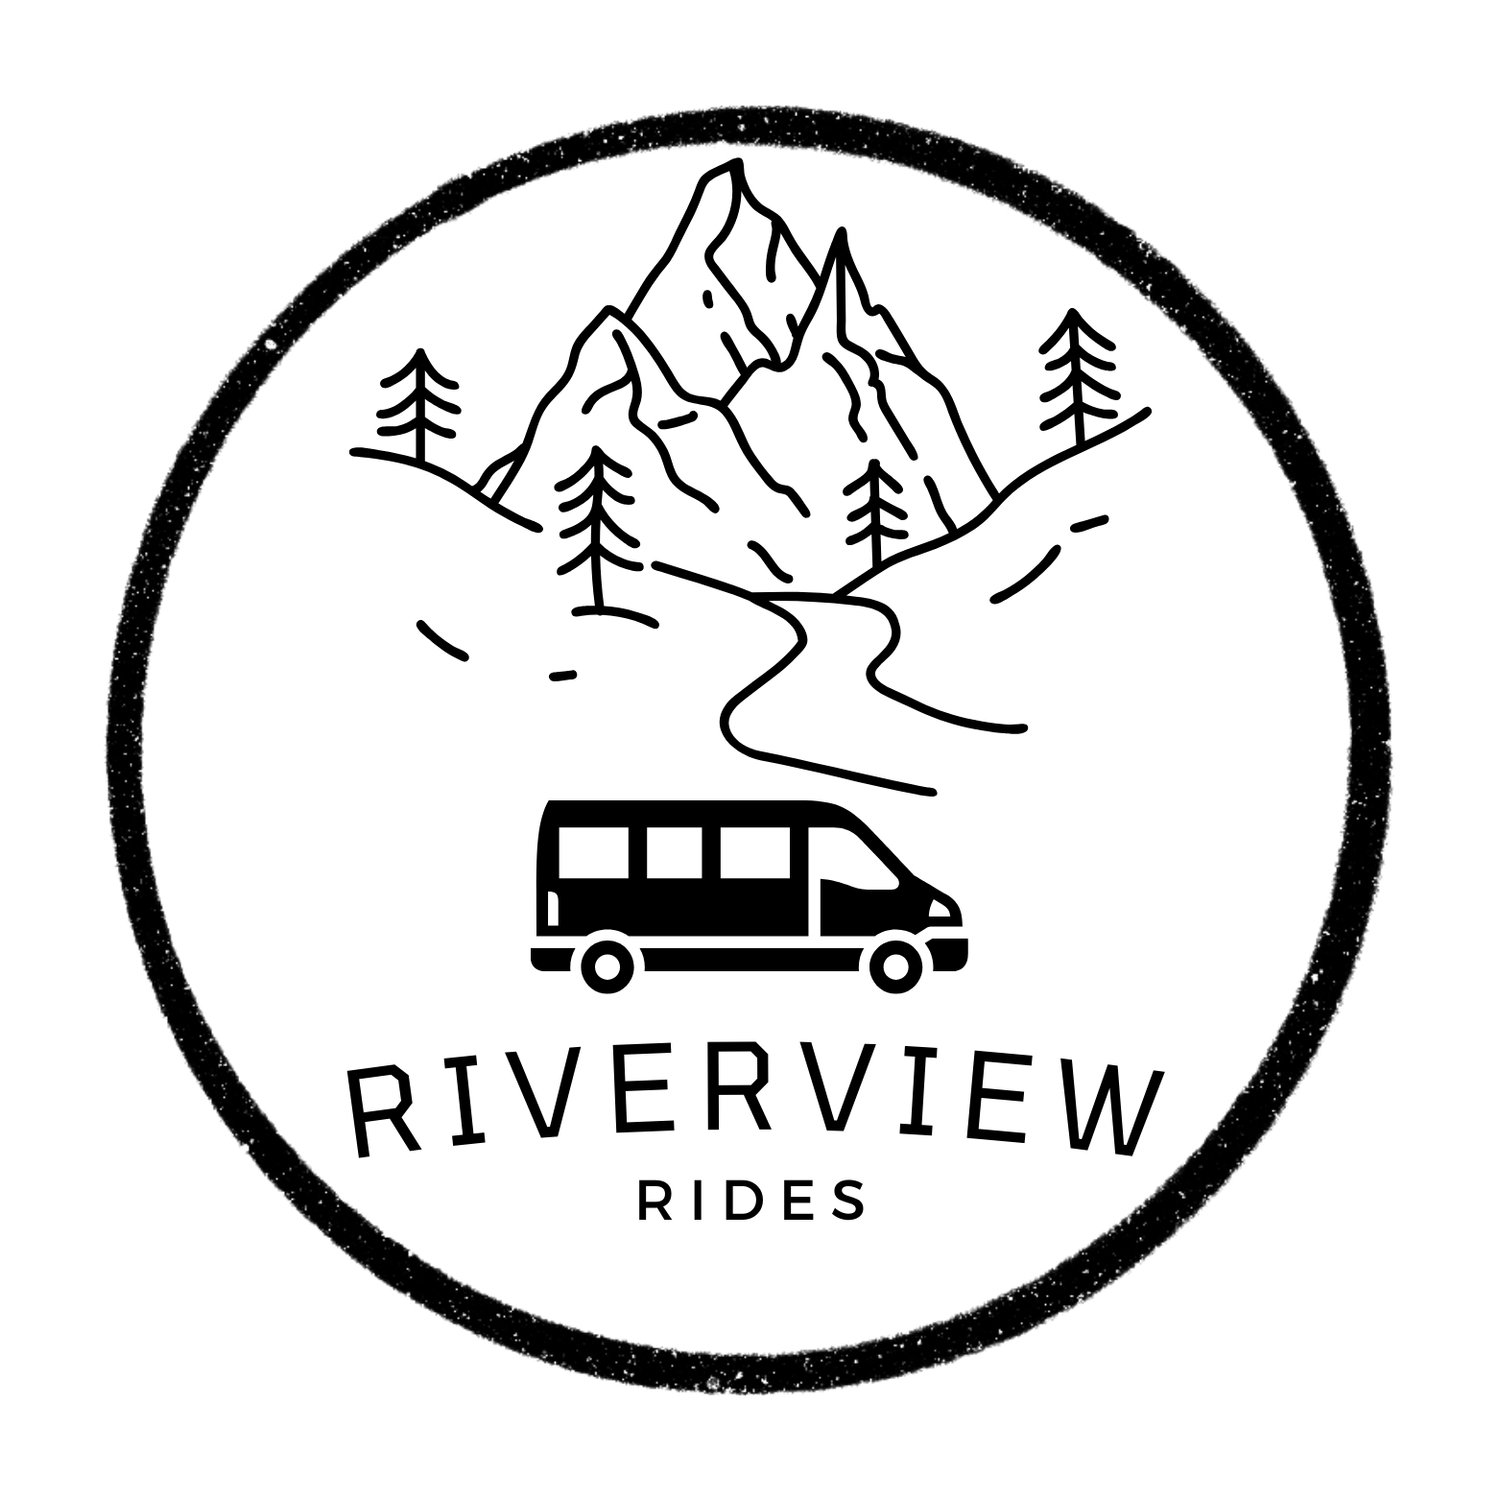 www.riverviewrides.com